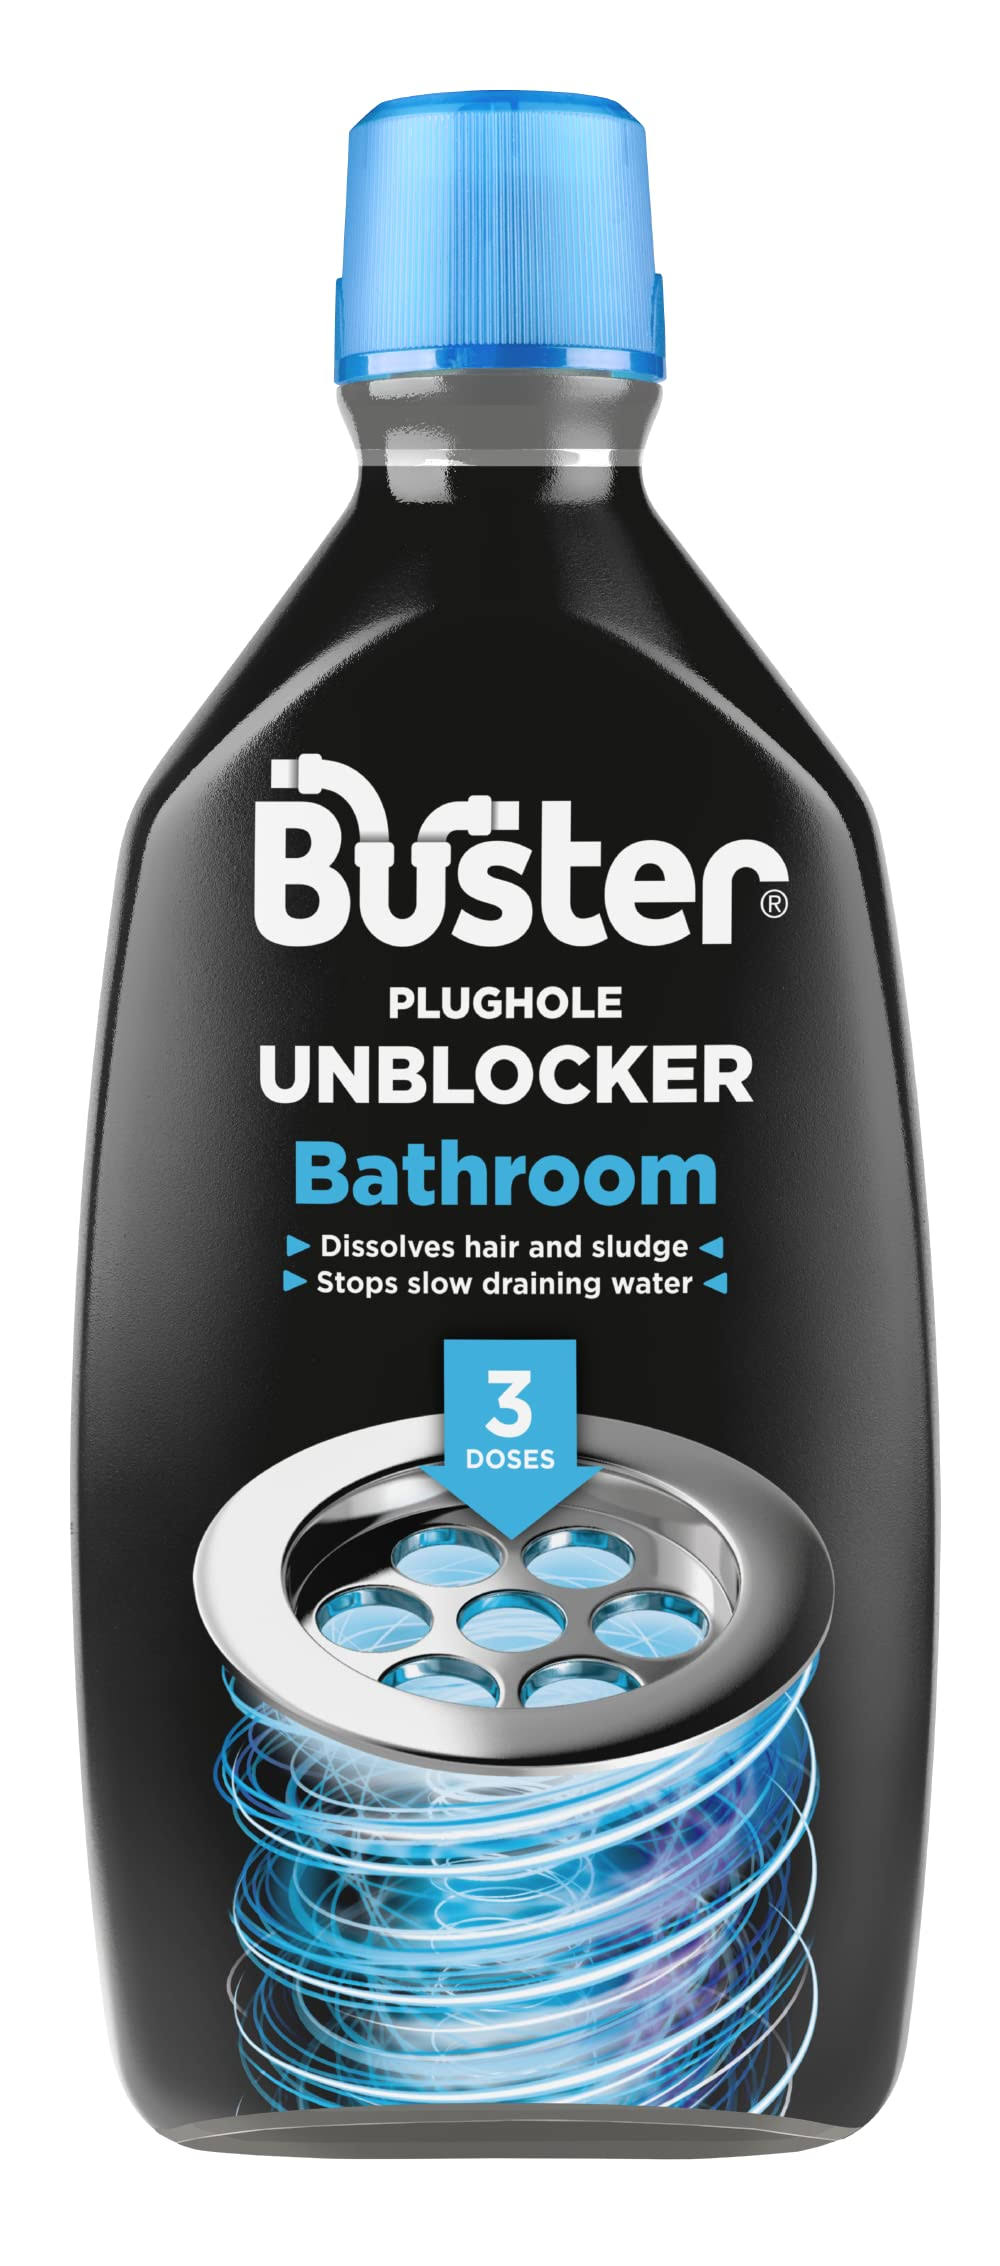 Buster Bathroom Drain Unblocker, Dissolves Hair and Sludge, 3 Dose Pack, 900ml